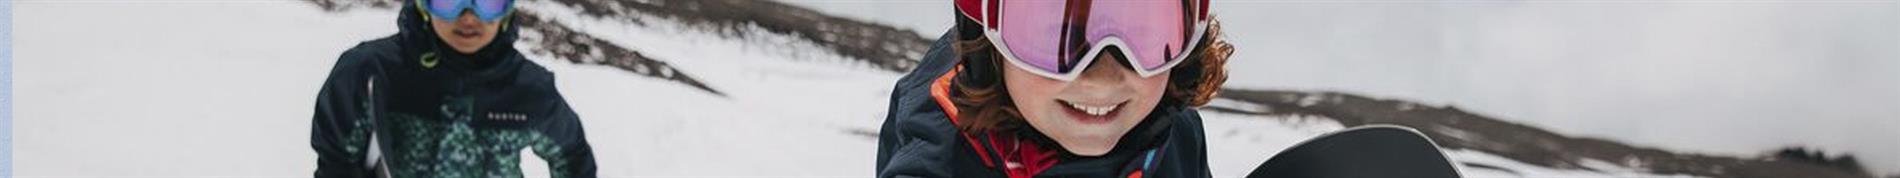 Obermeyer Kids Ski & Snowboard Clothing (Ages 6-16) 